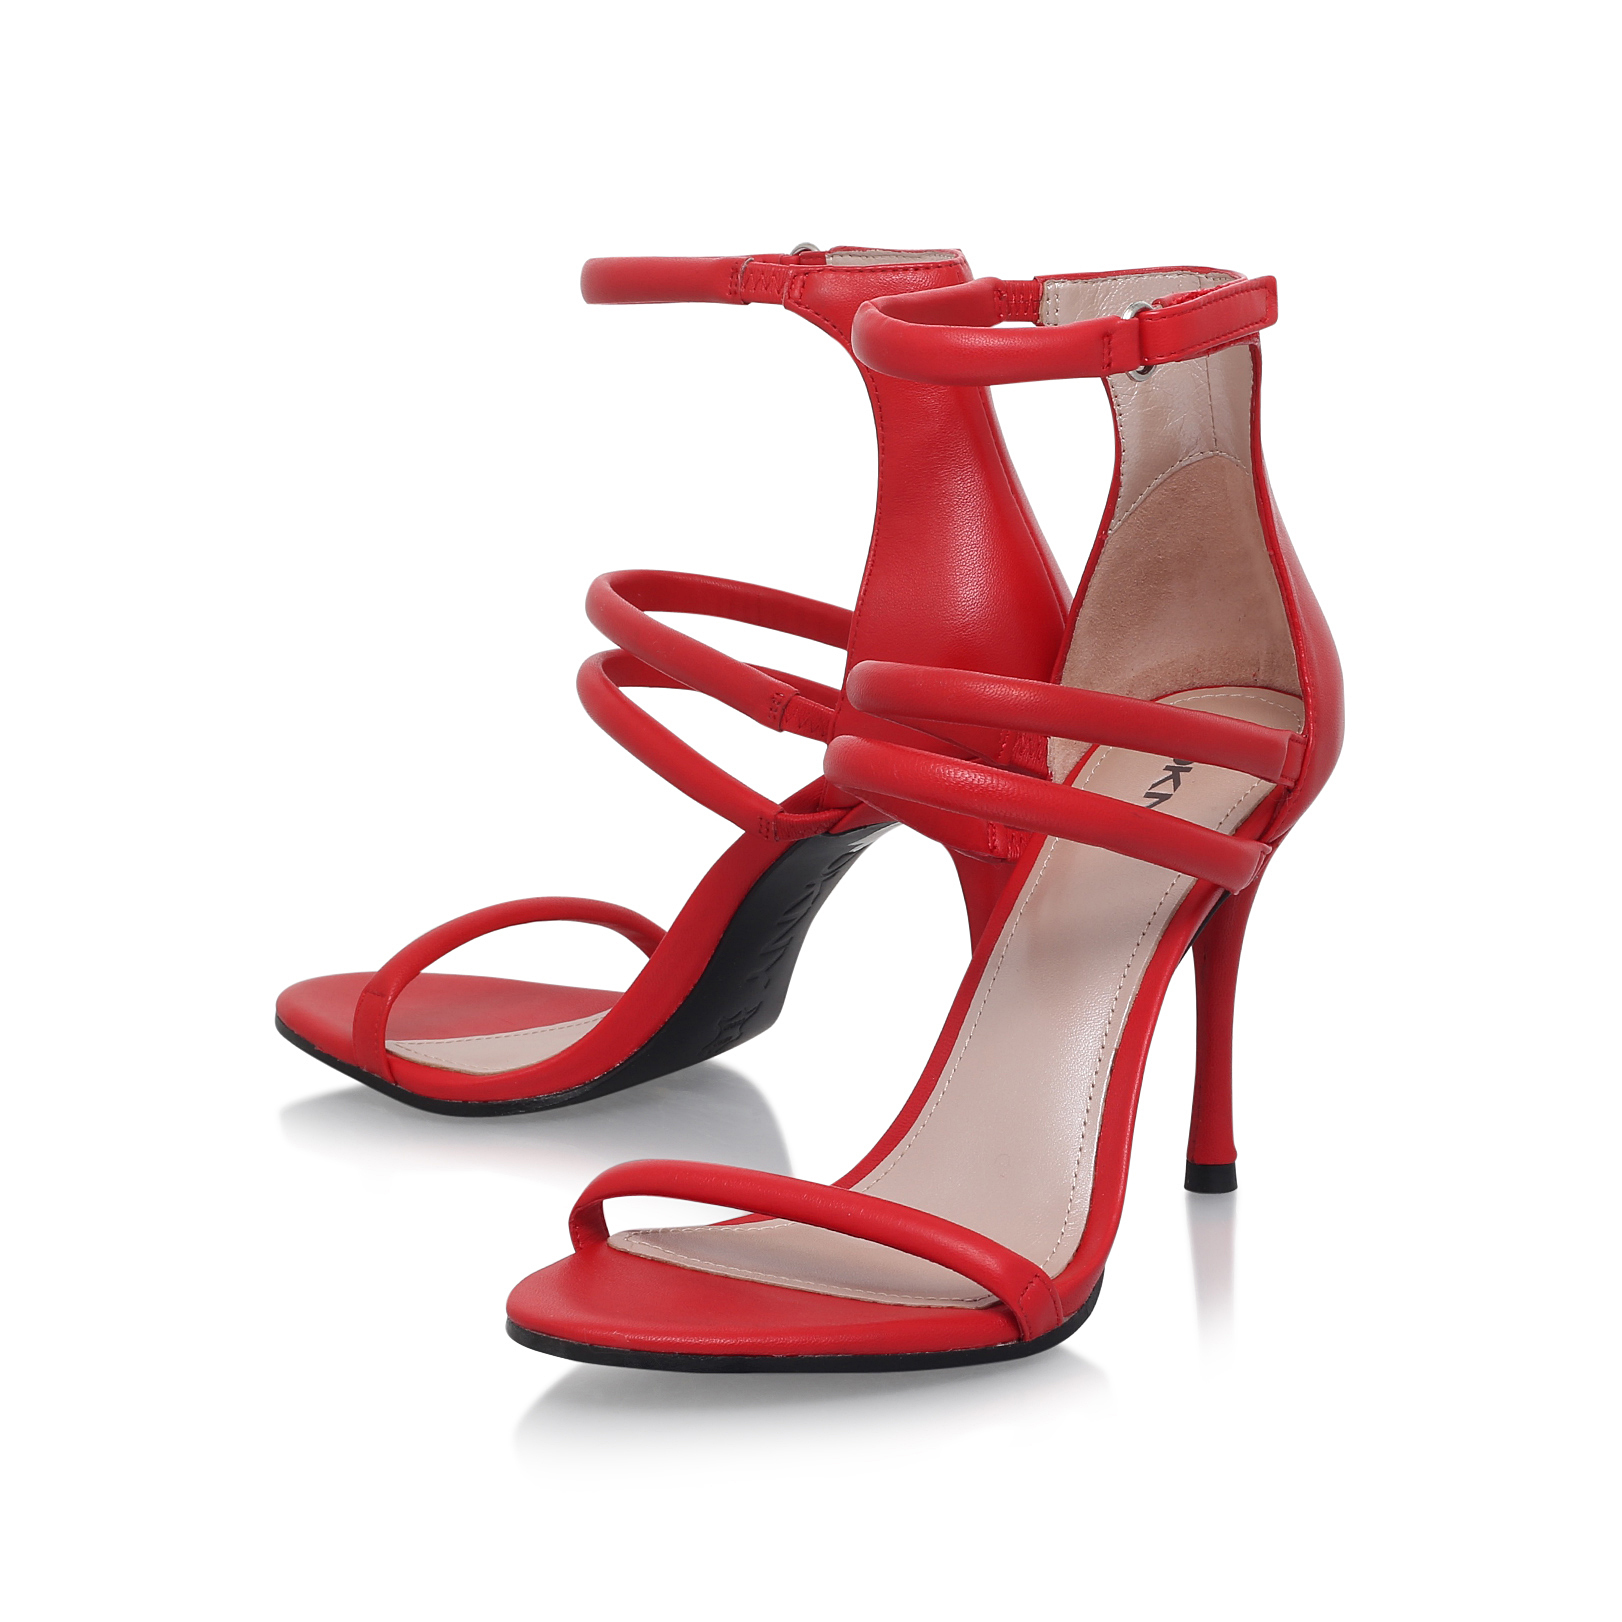 MAYA DKNY Maya Red Leather Medium Heel Occasion Shoes by DKNY